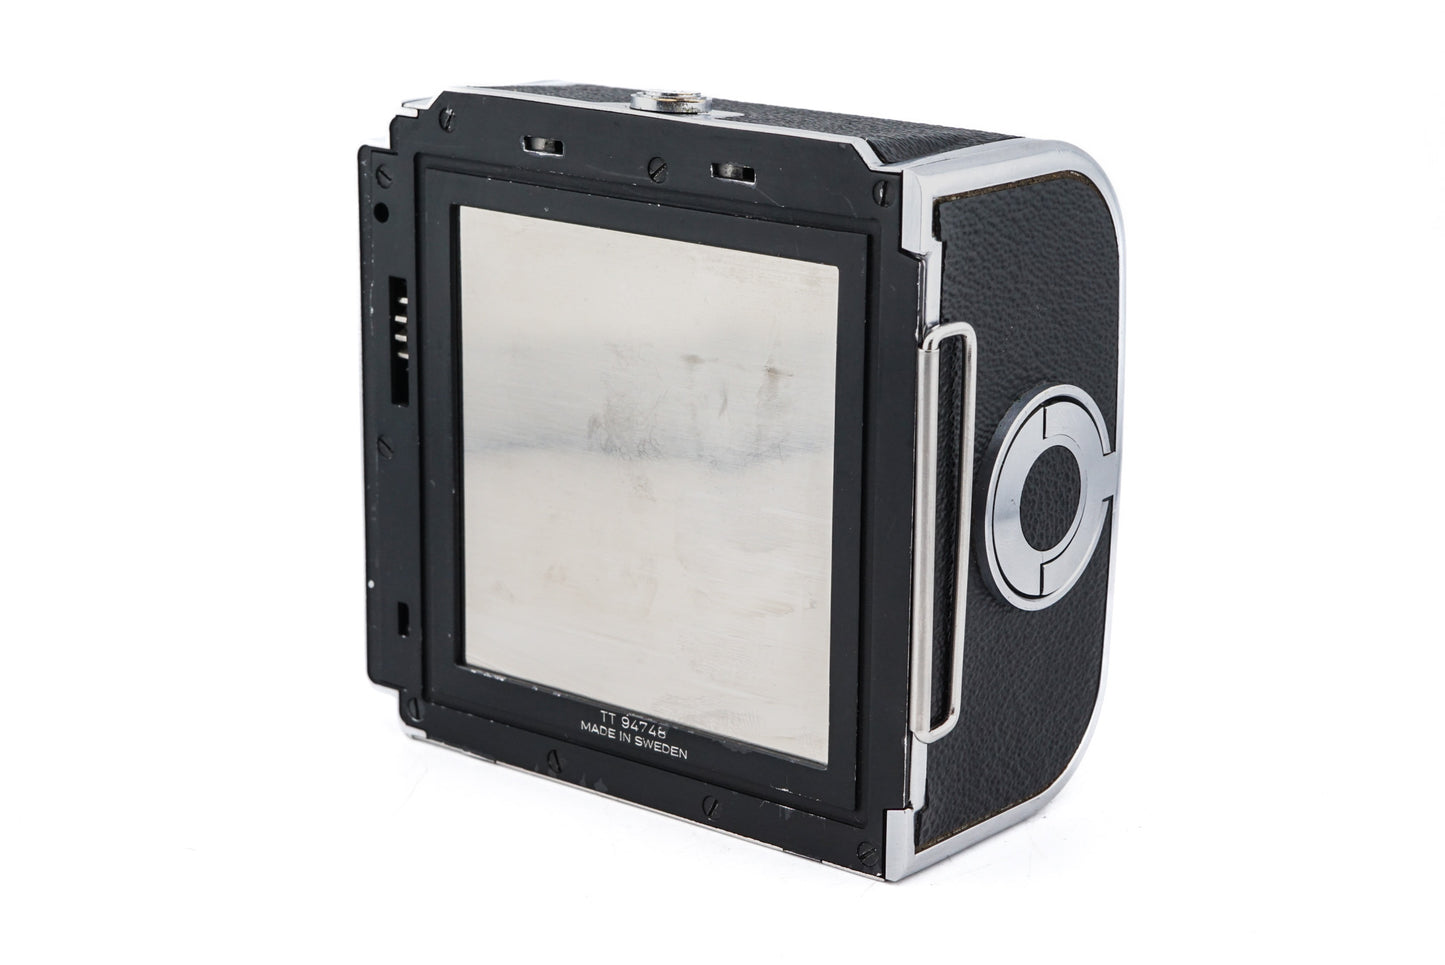 Hasselblad 500C + C12 Film Magazine (30015 / TIMAC) + 80mm f2.8 Planar C + Waist Level Finder (Old / 42021 Chrome)